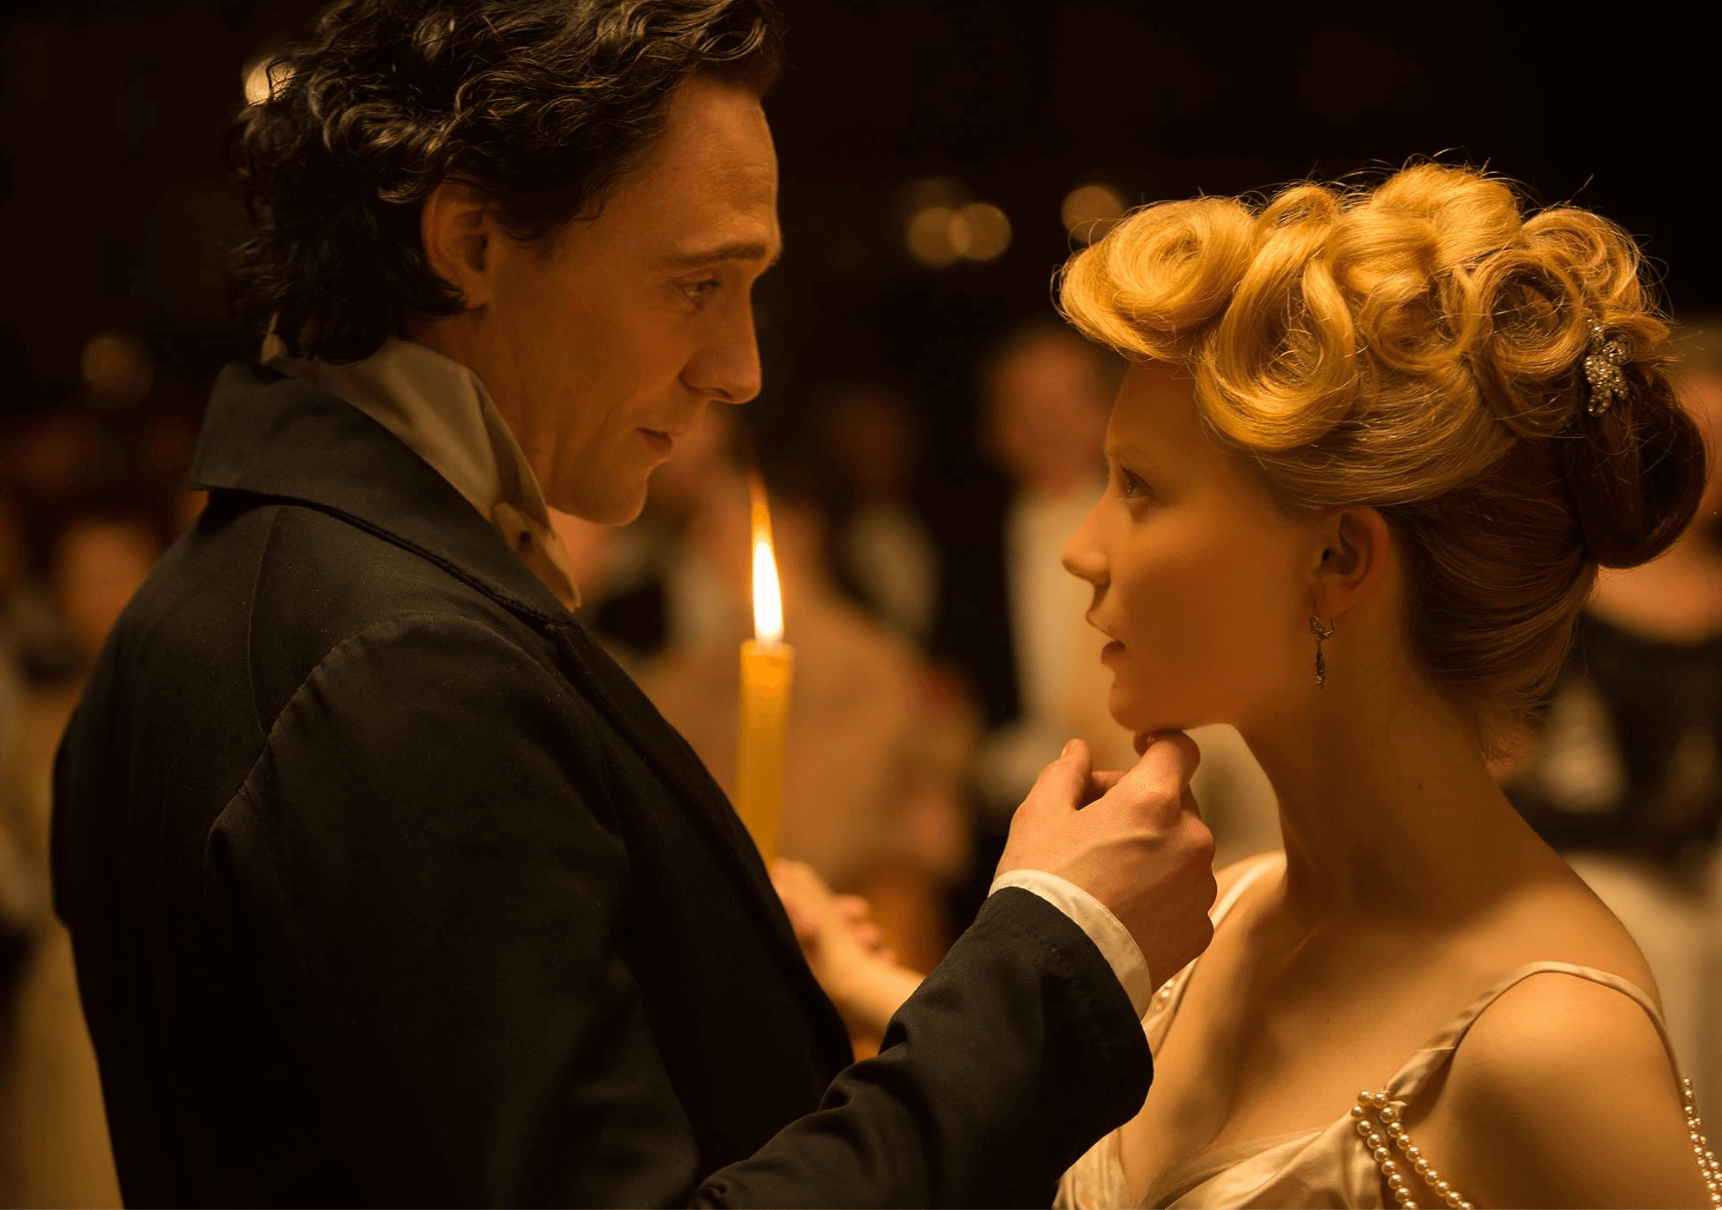 Mia Wasikowska and Tom Hiddleston play the doomed yet compelling love interests, Edith Cushing and Sir Thomas Sharpe